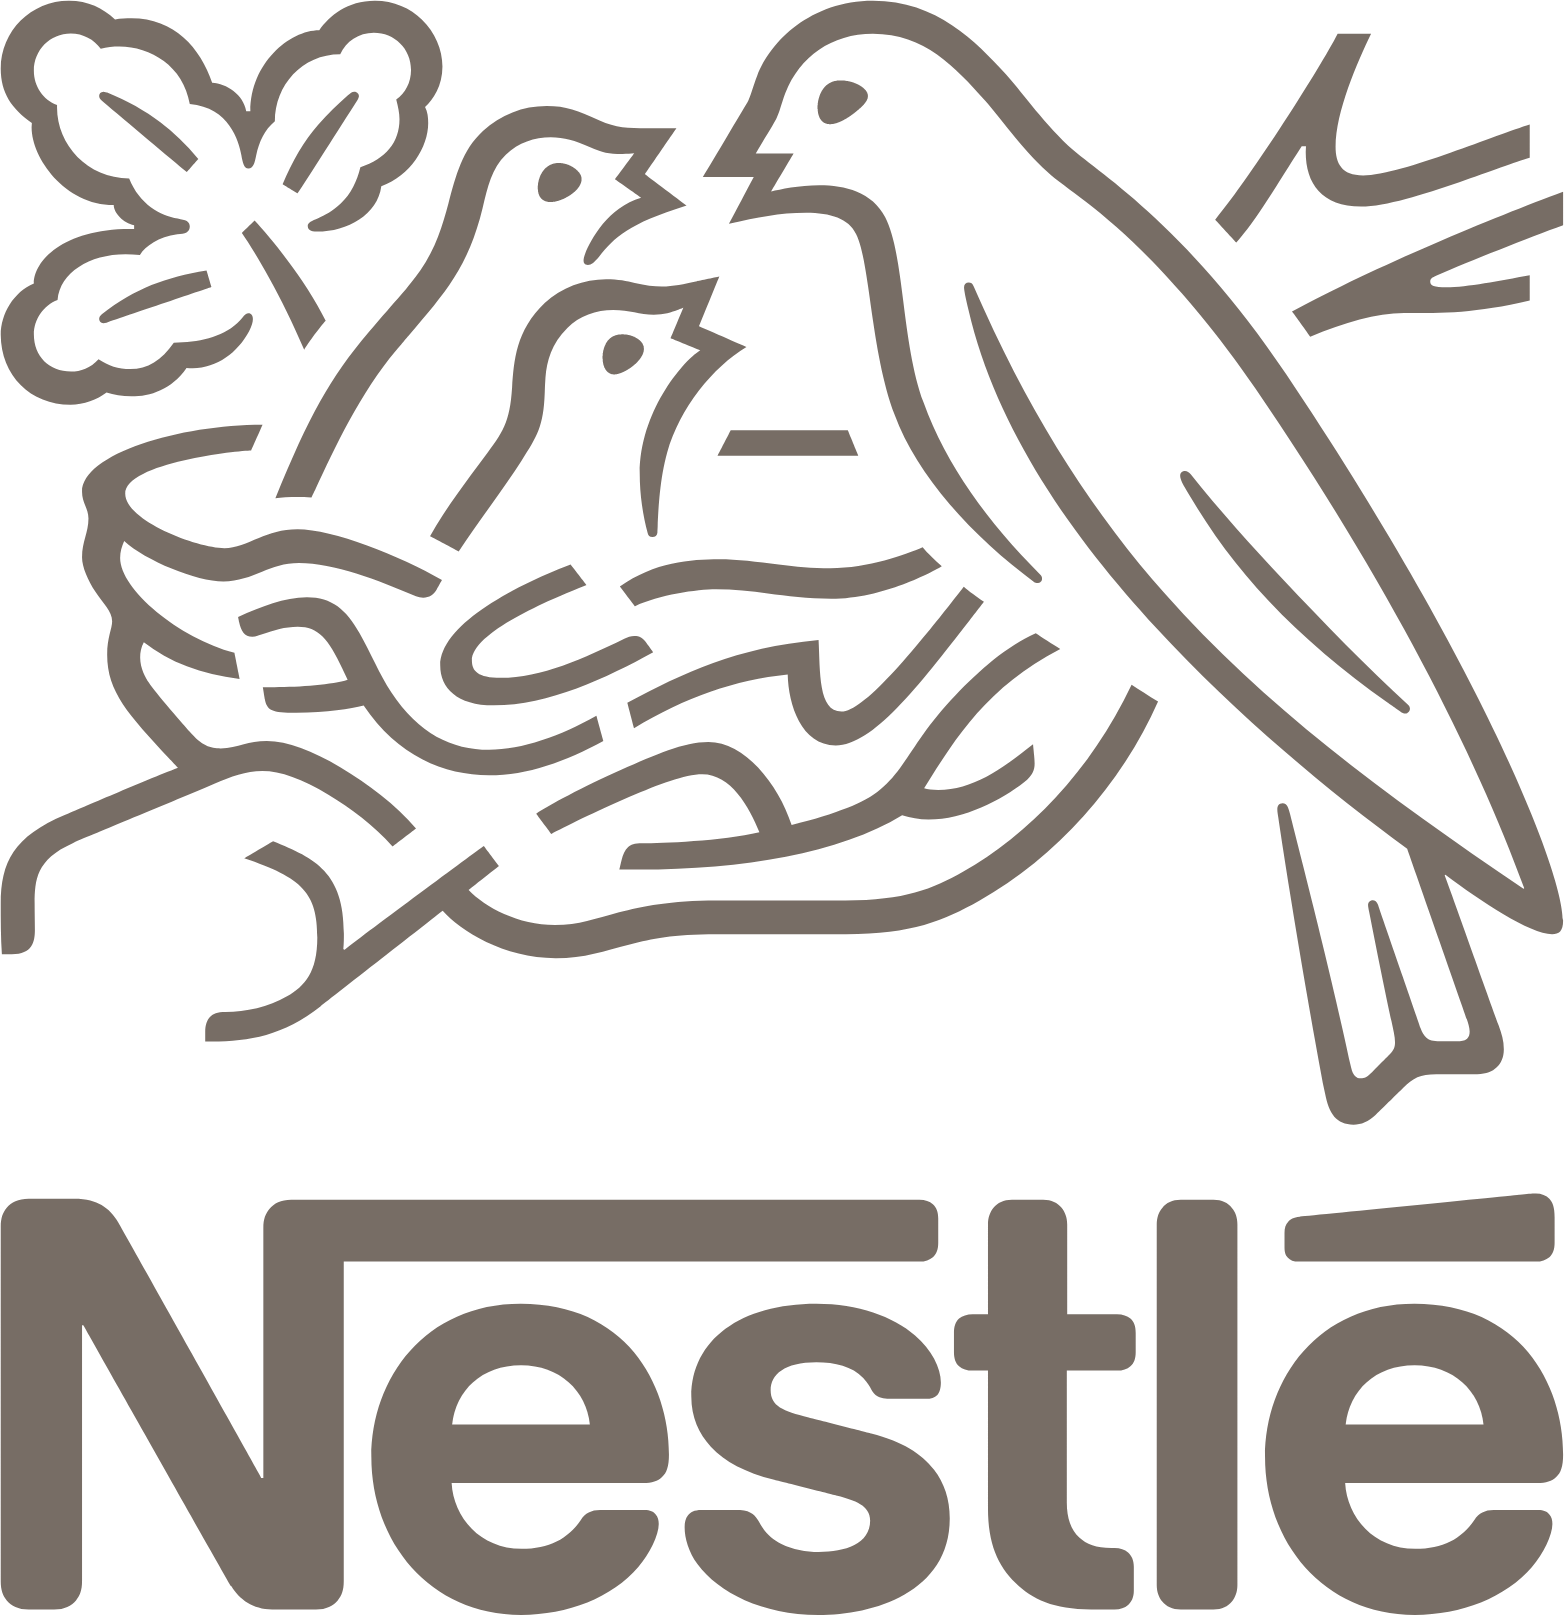 Nestlé logo large (transparent PNG)